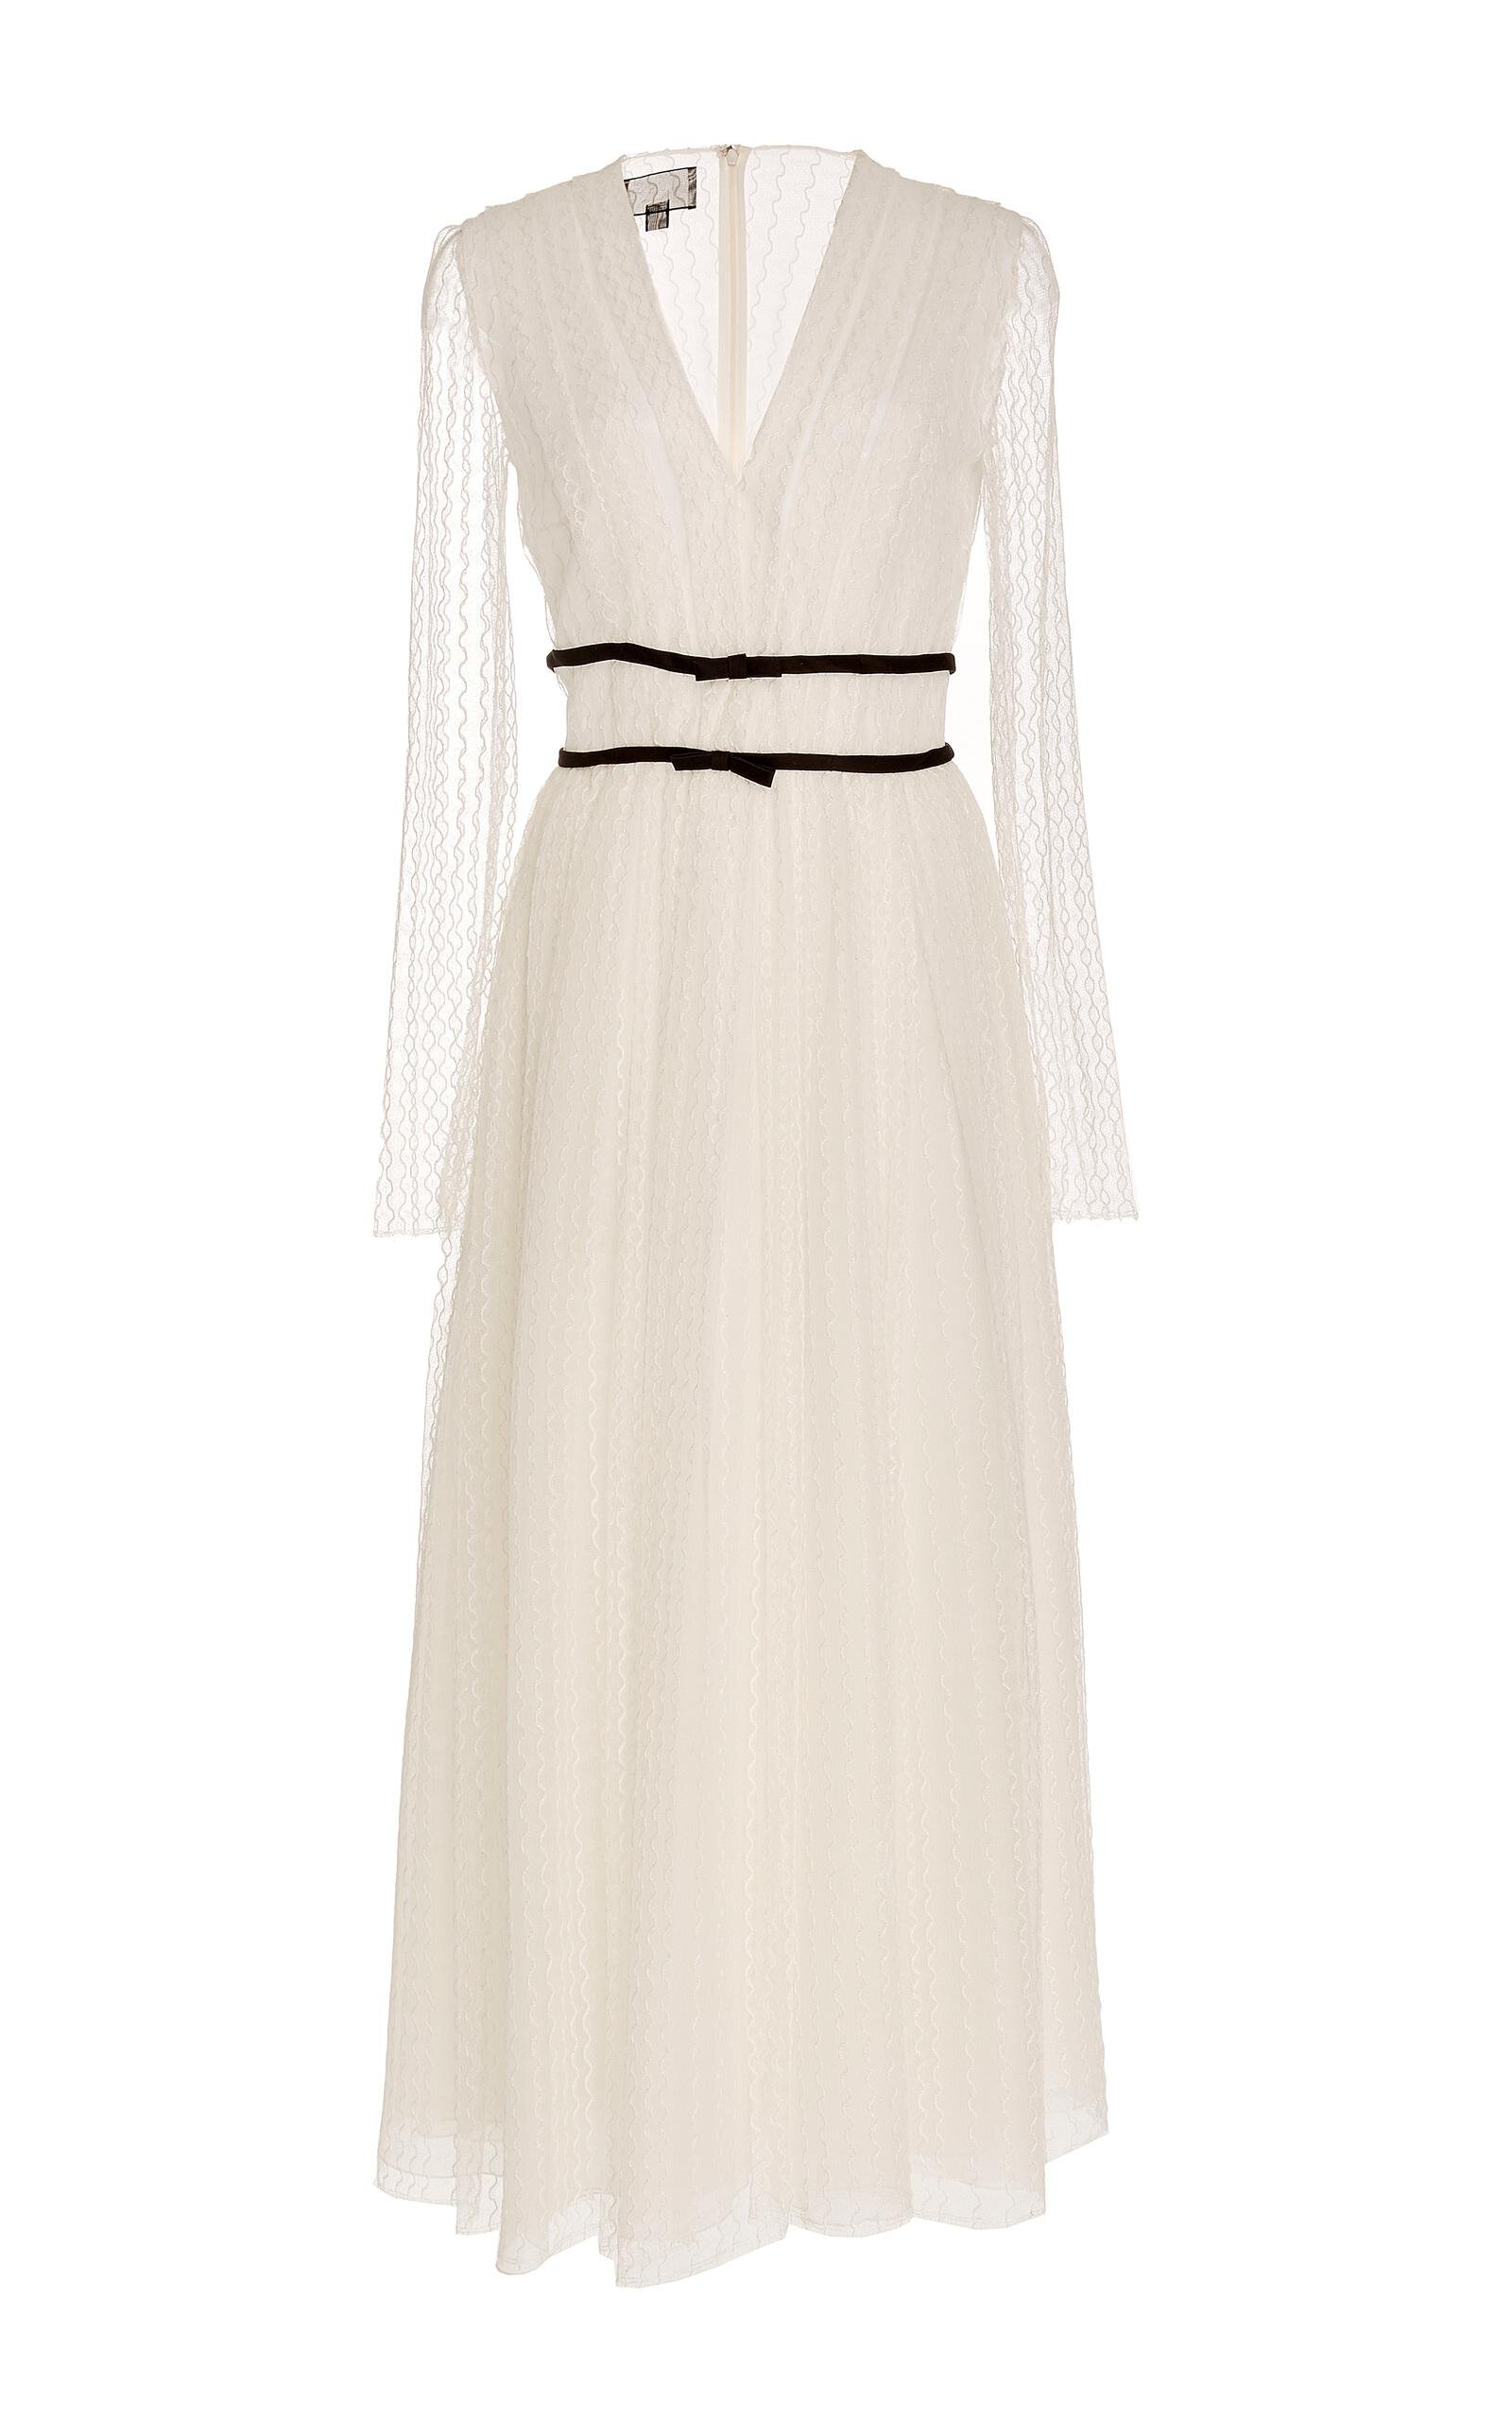 Giambattista Valli Embroidered Bow-Embellished Midi Dress in White.jpg